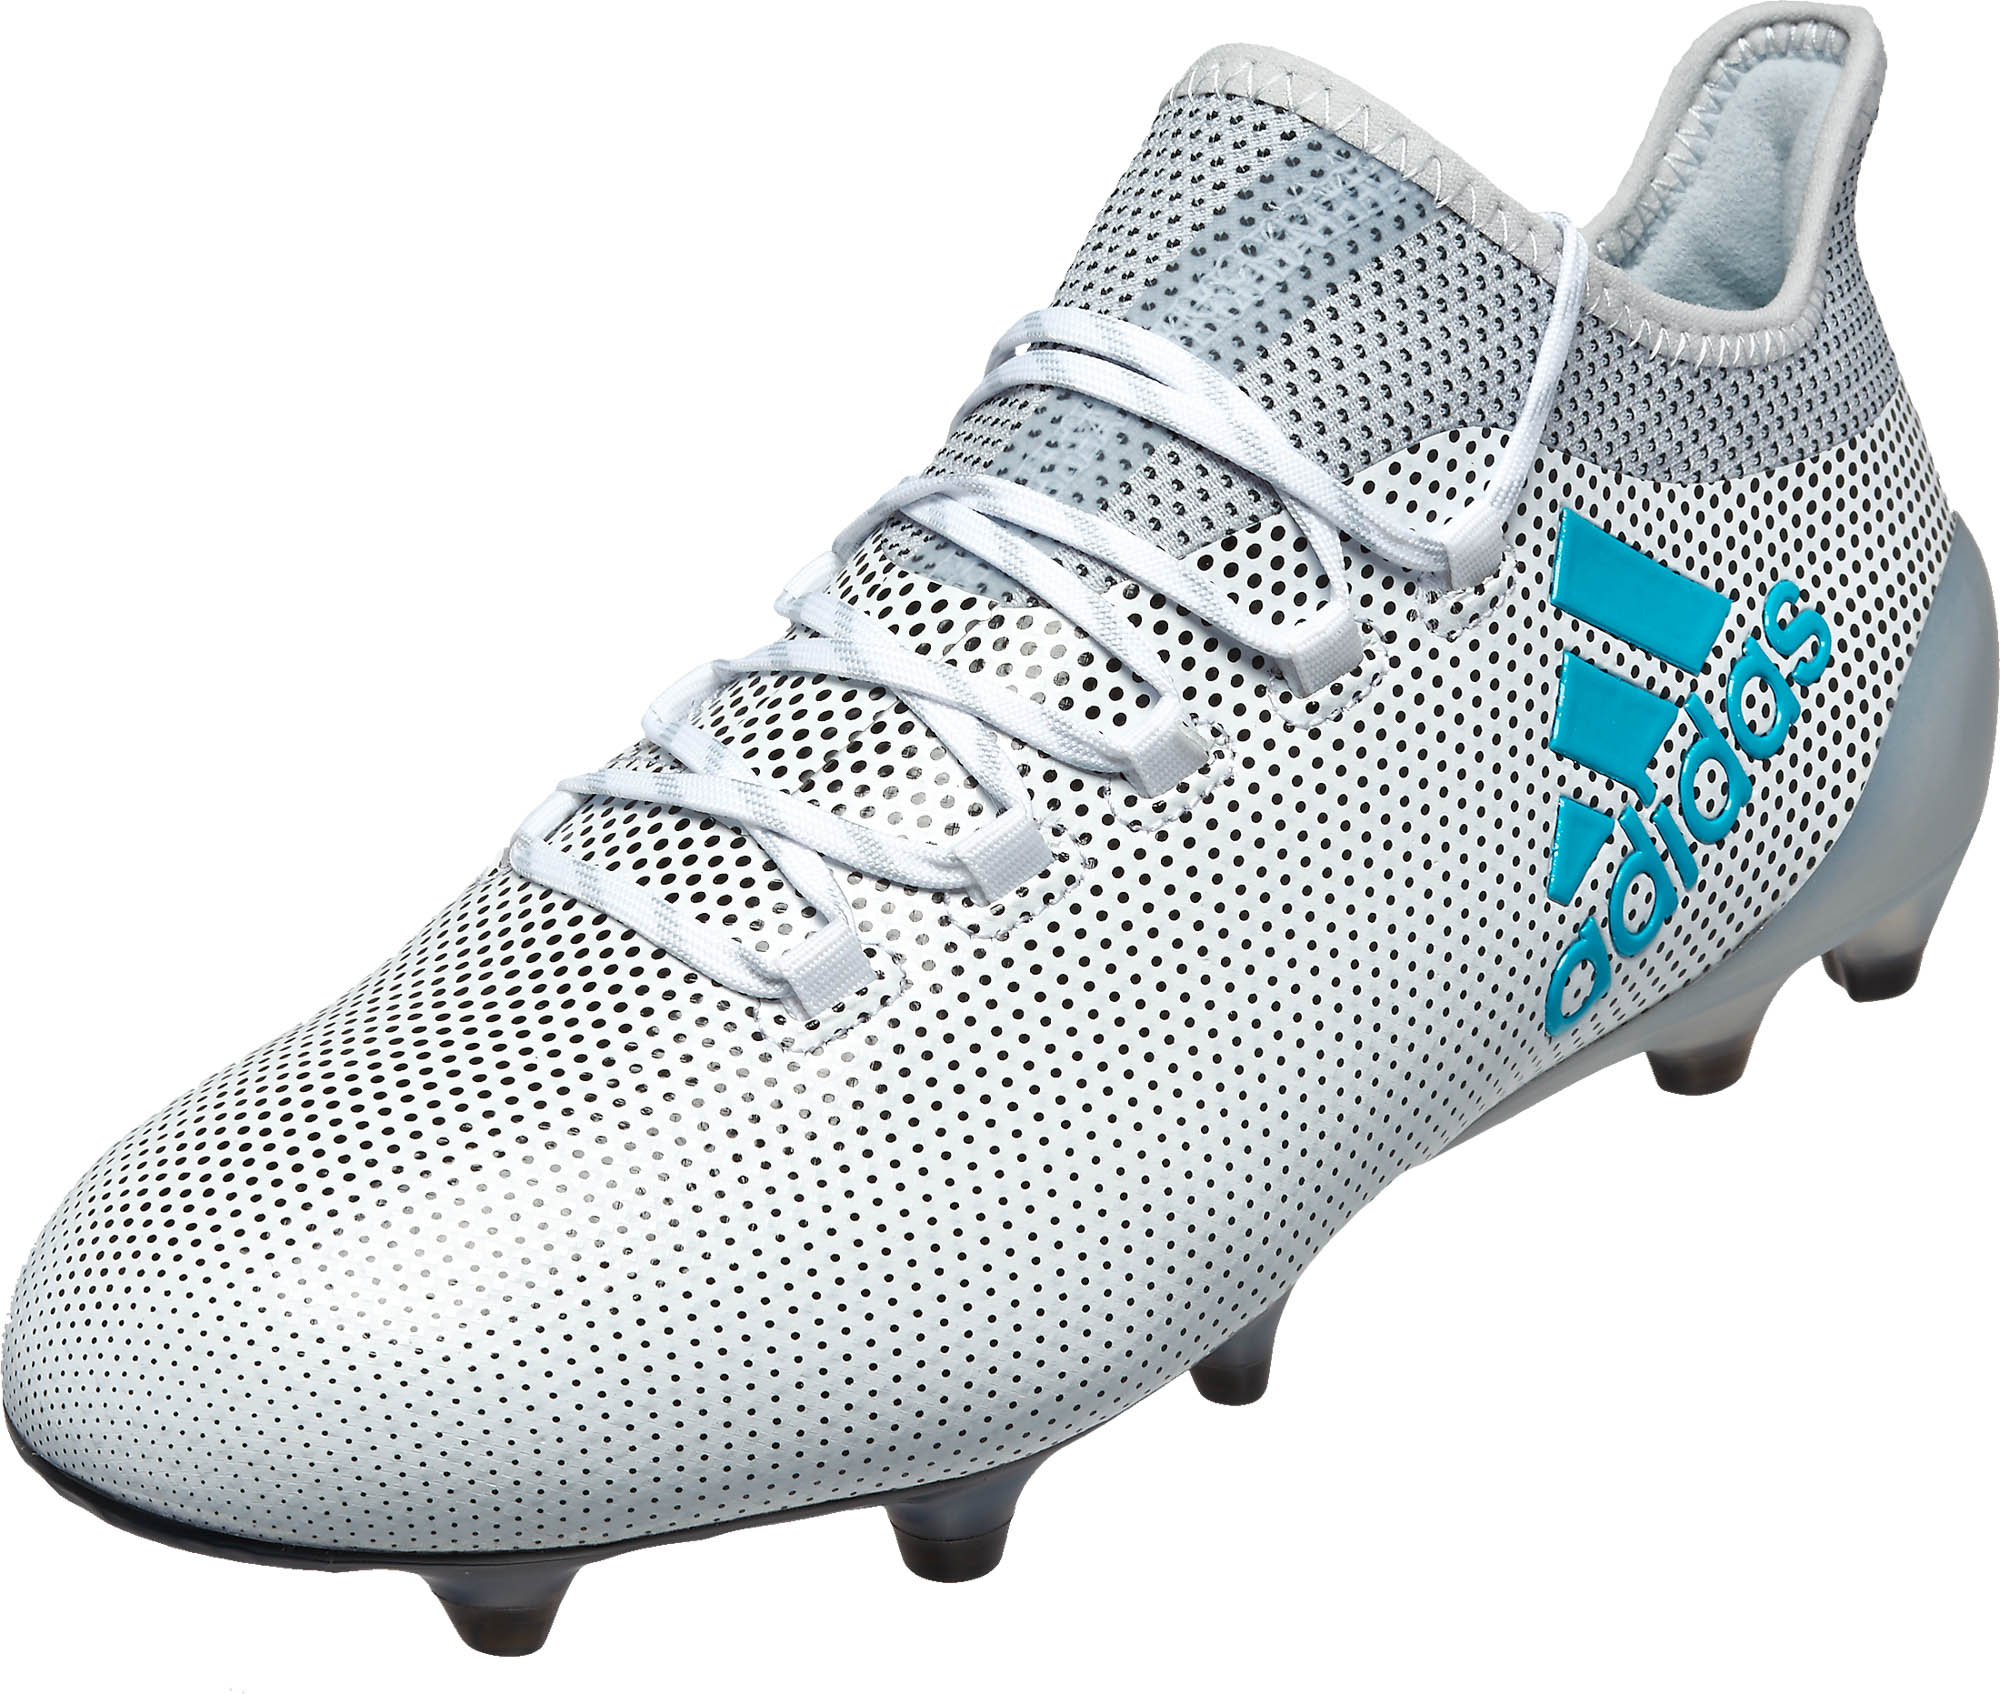 adidas X 17.1 FG Soccer Cleats - White Energy Blue - Soccer Master